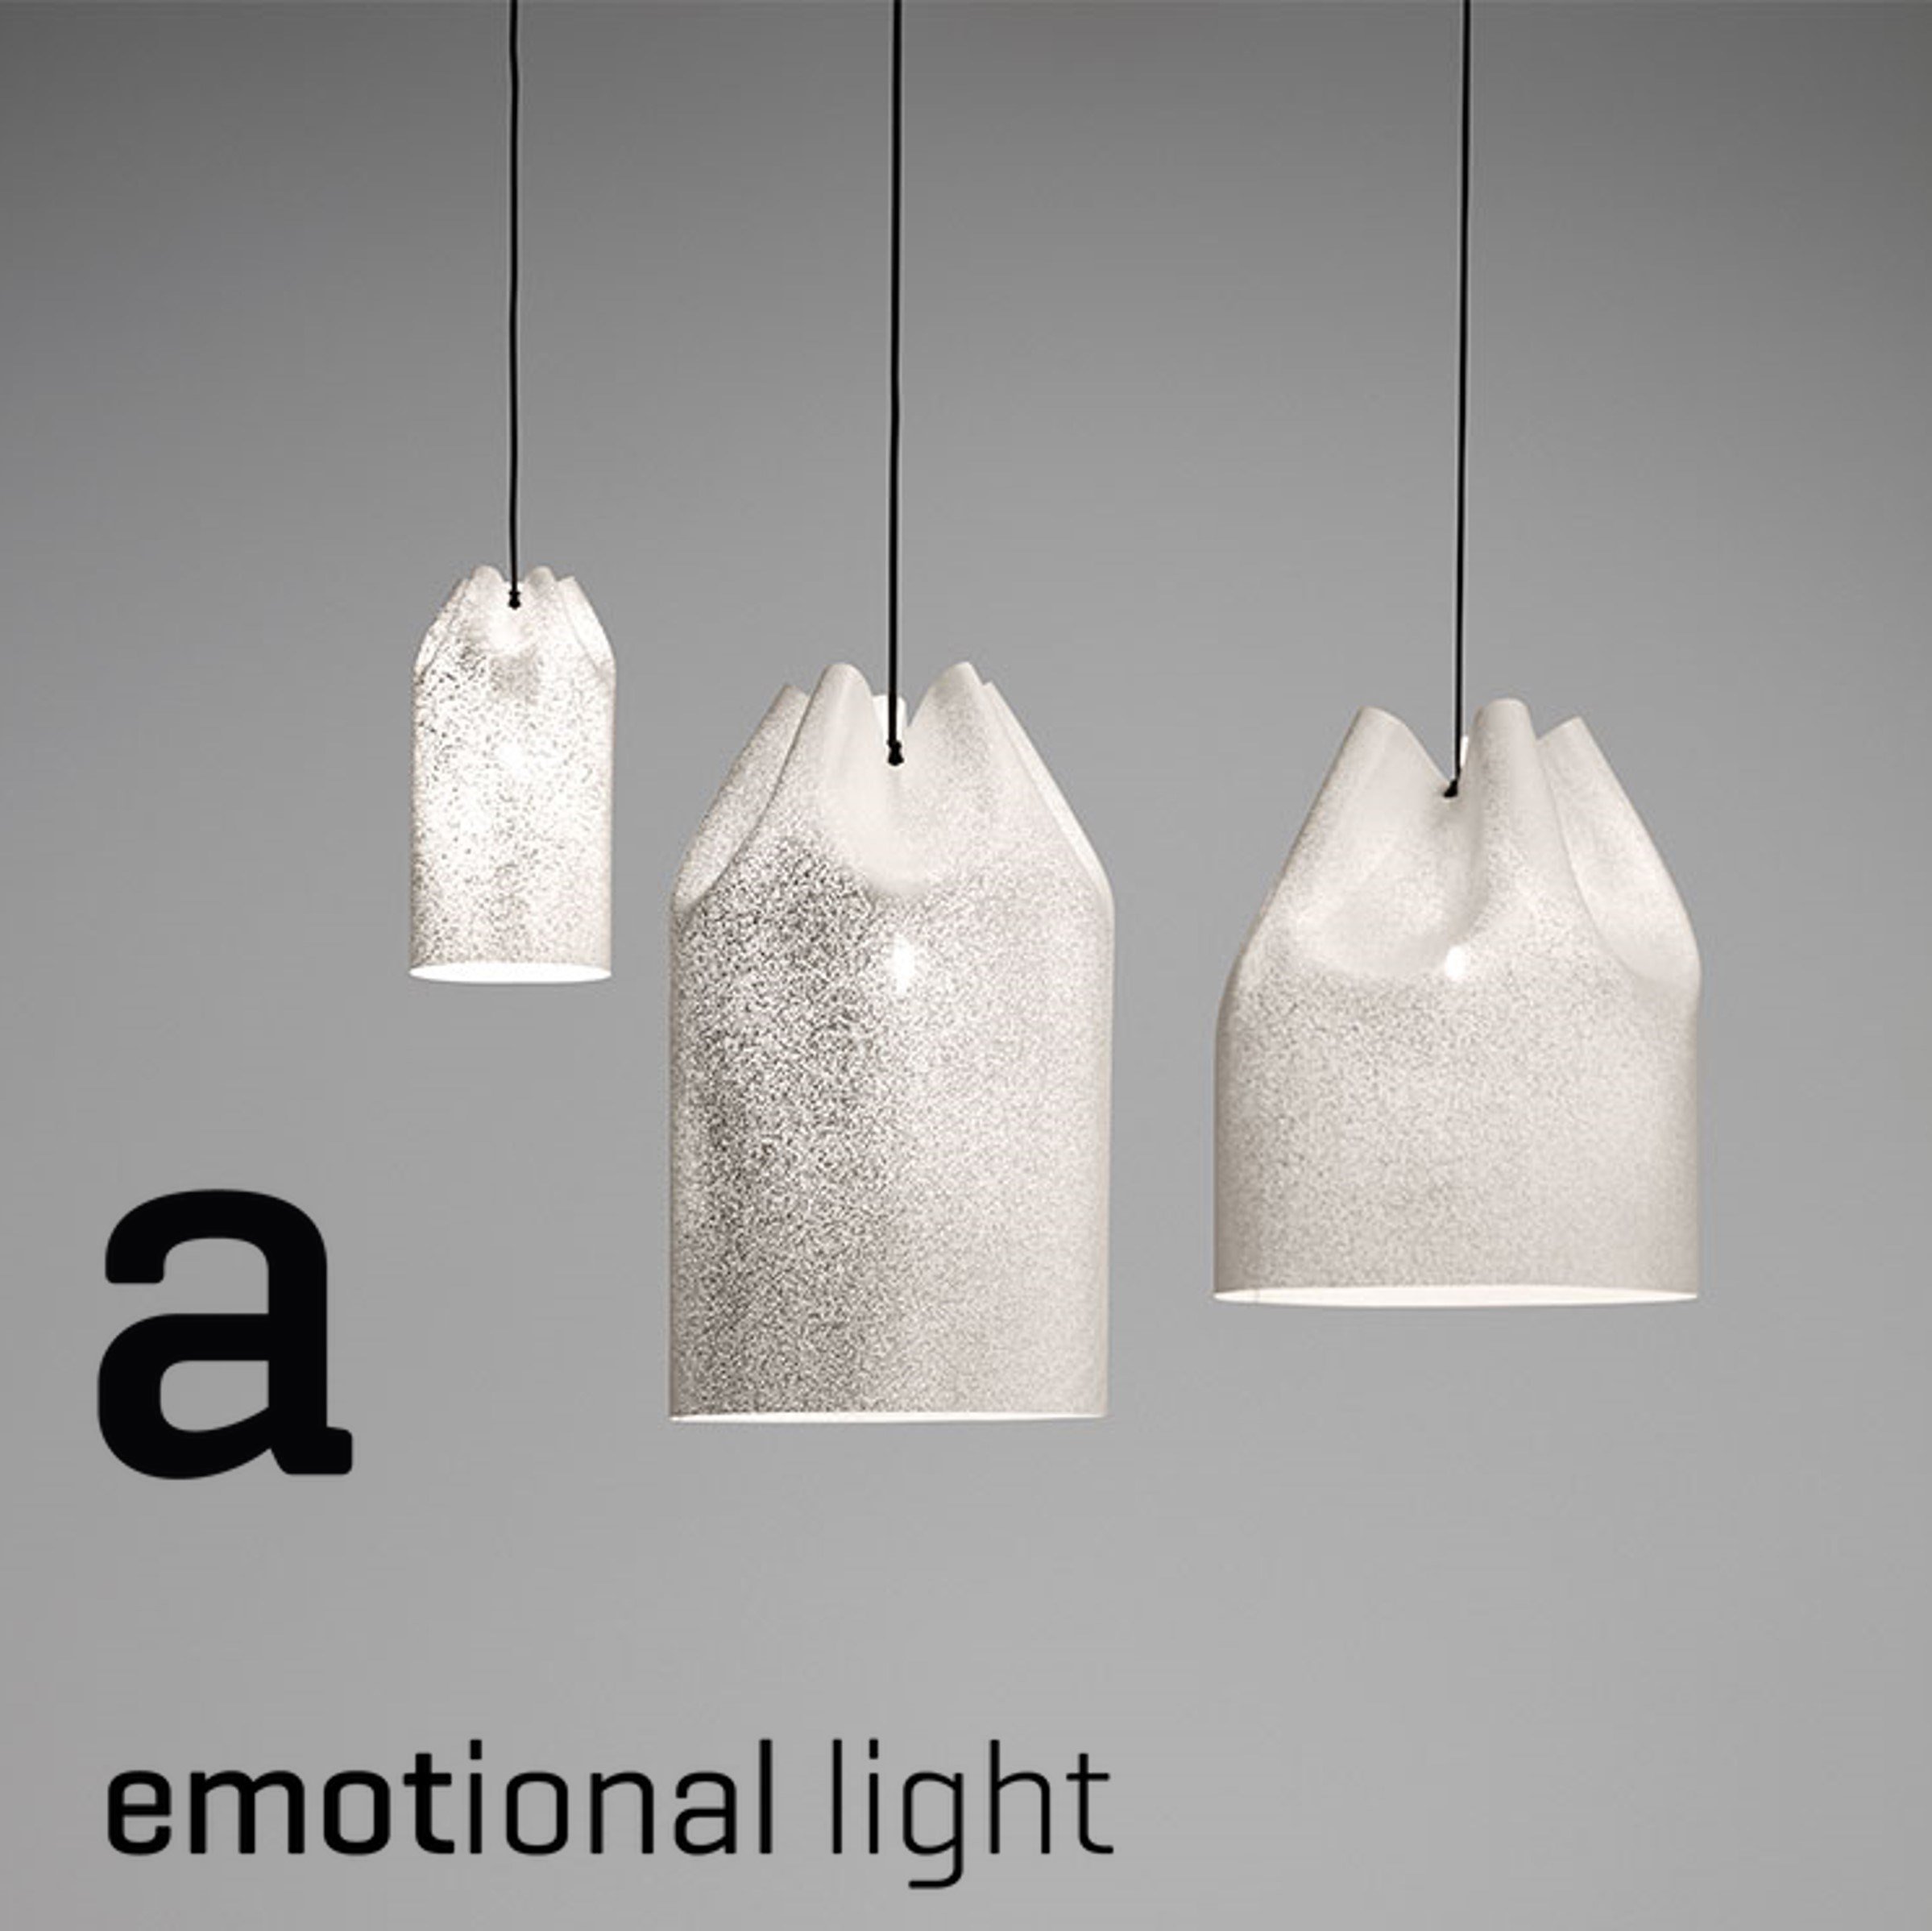 a-emotional light